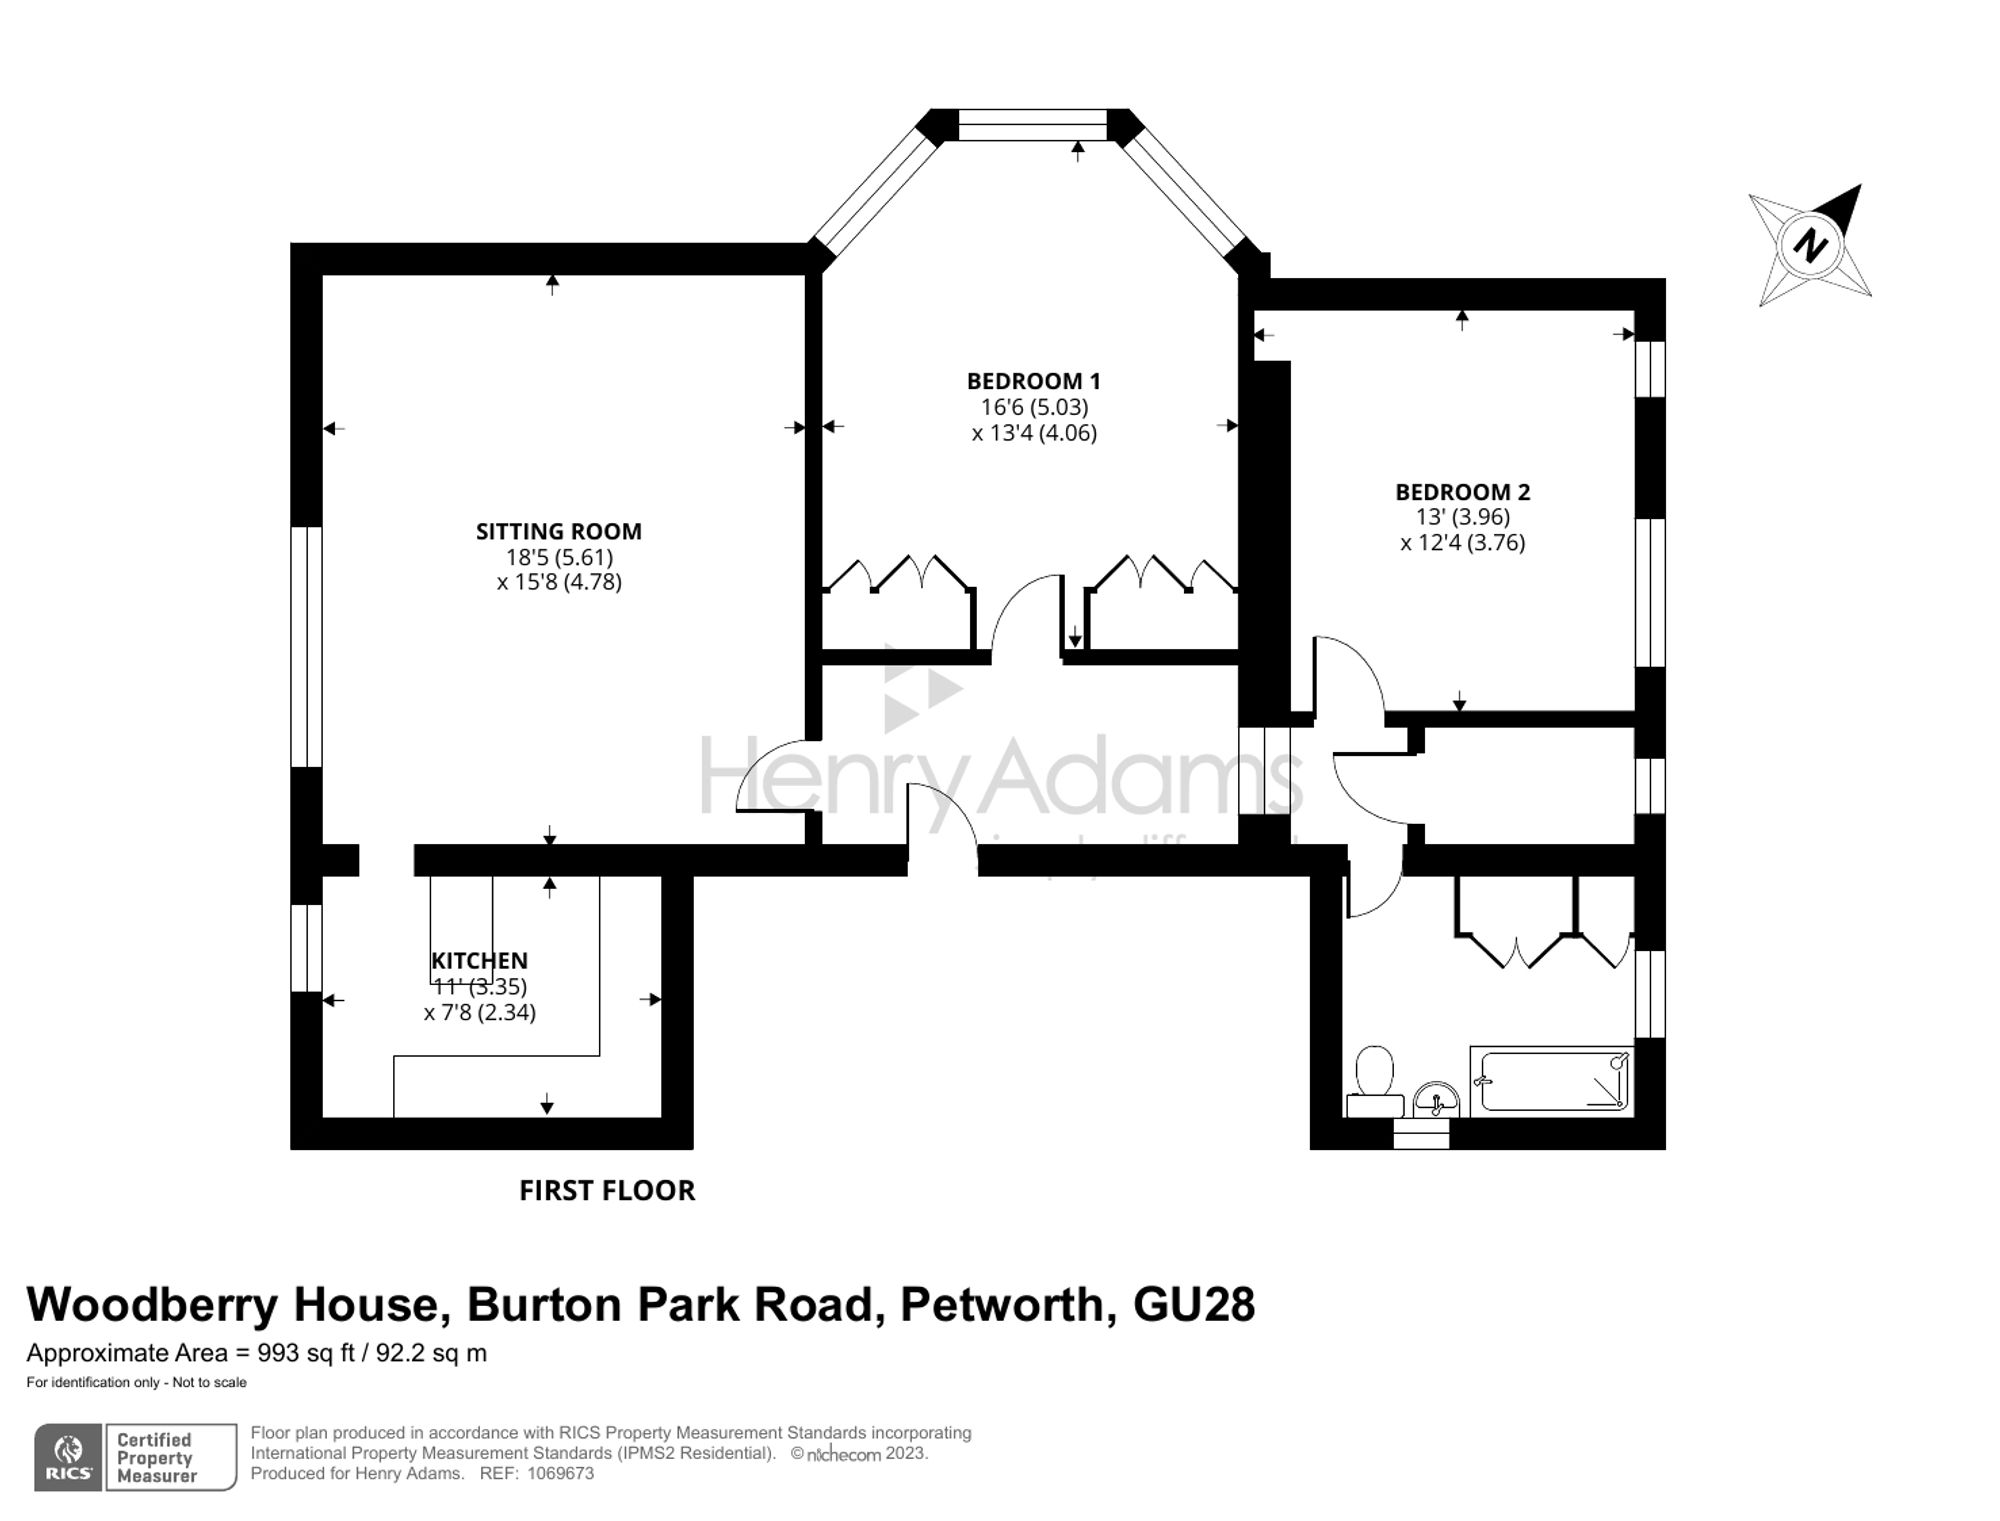 Burton Park Road, Petworth, GU28 floorplans